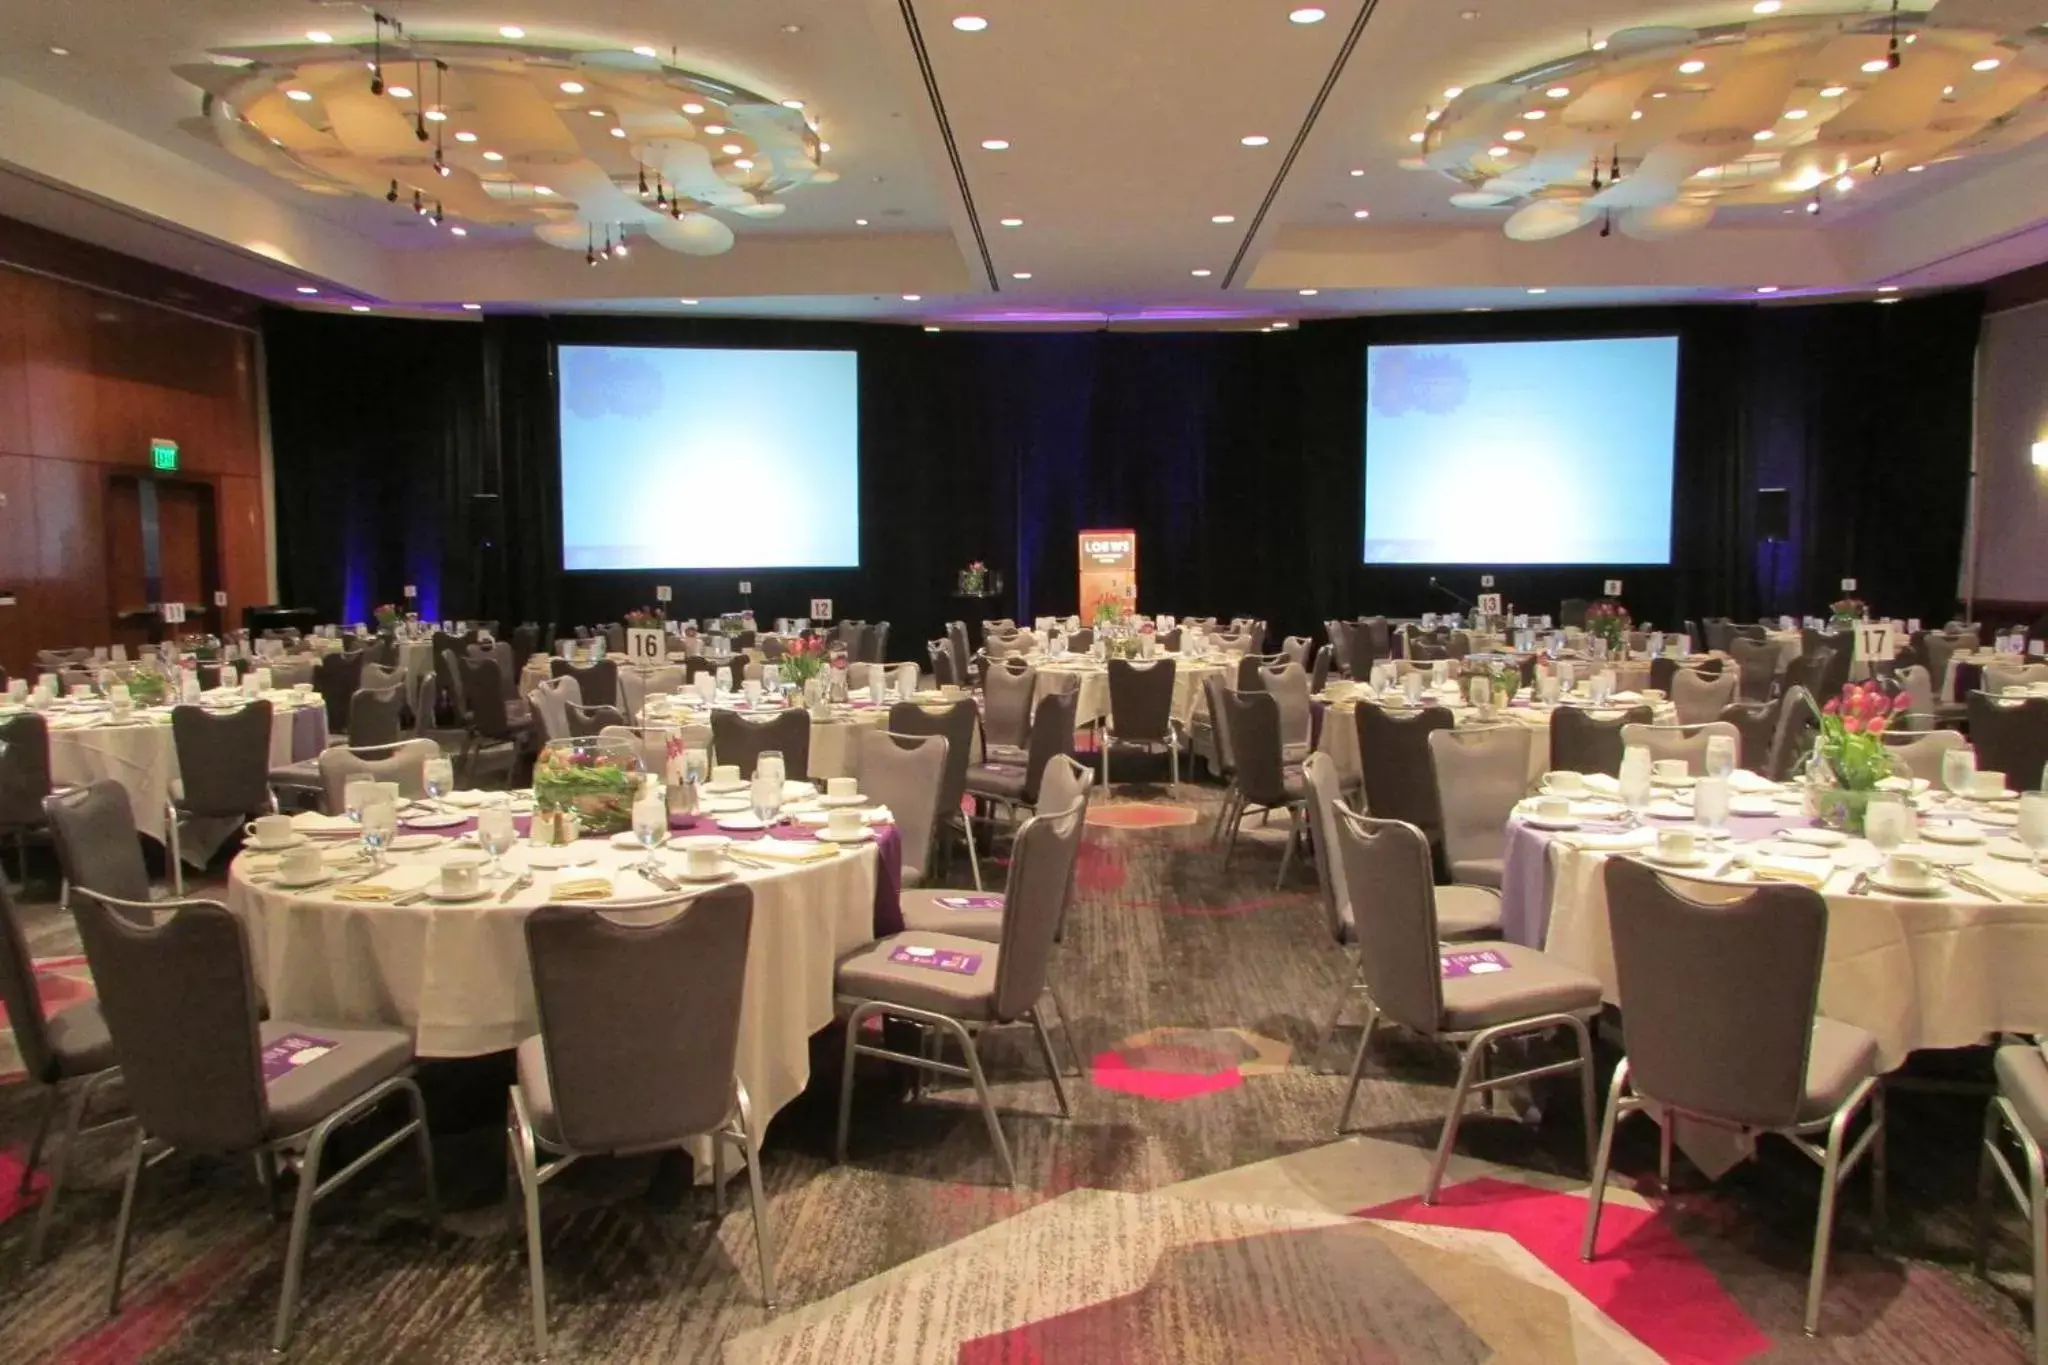 Banquet/Function facilities, Banquet Facilities in Loews Hollywood Hotel